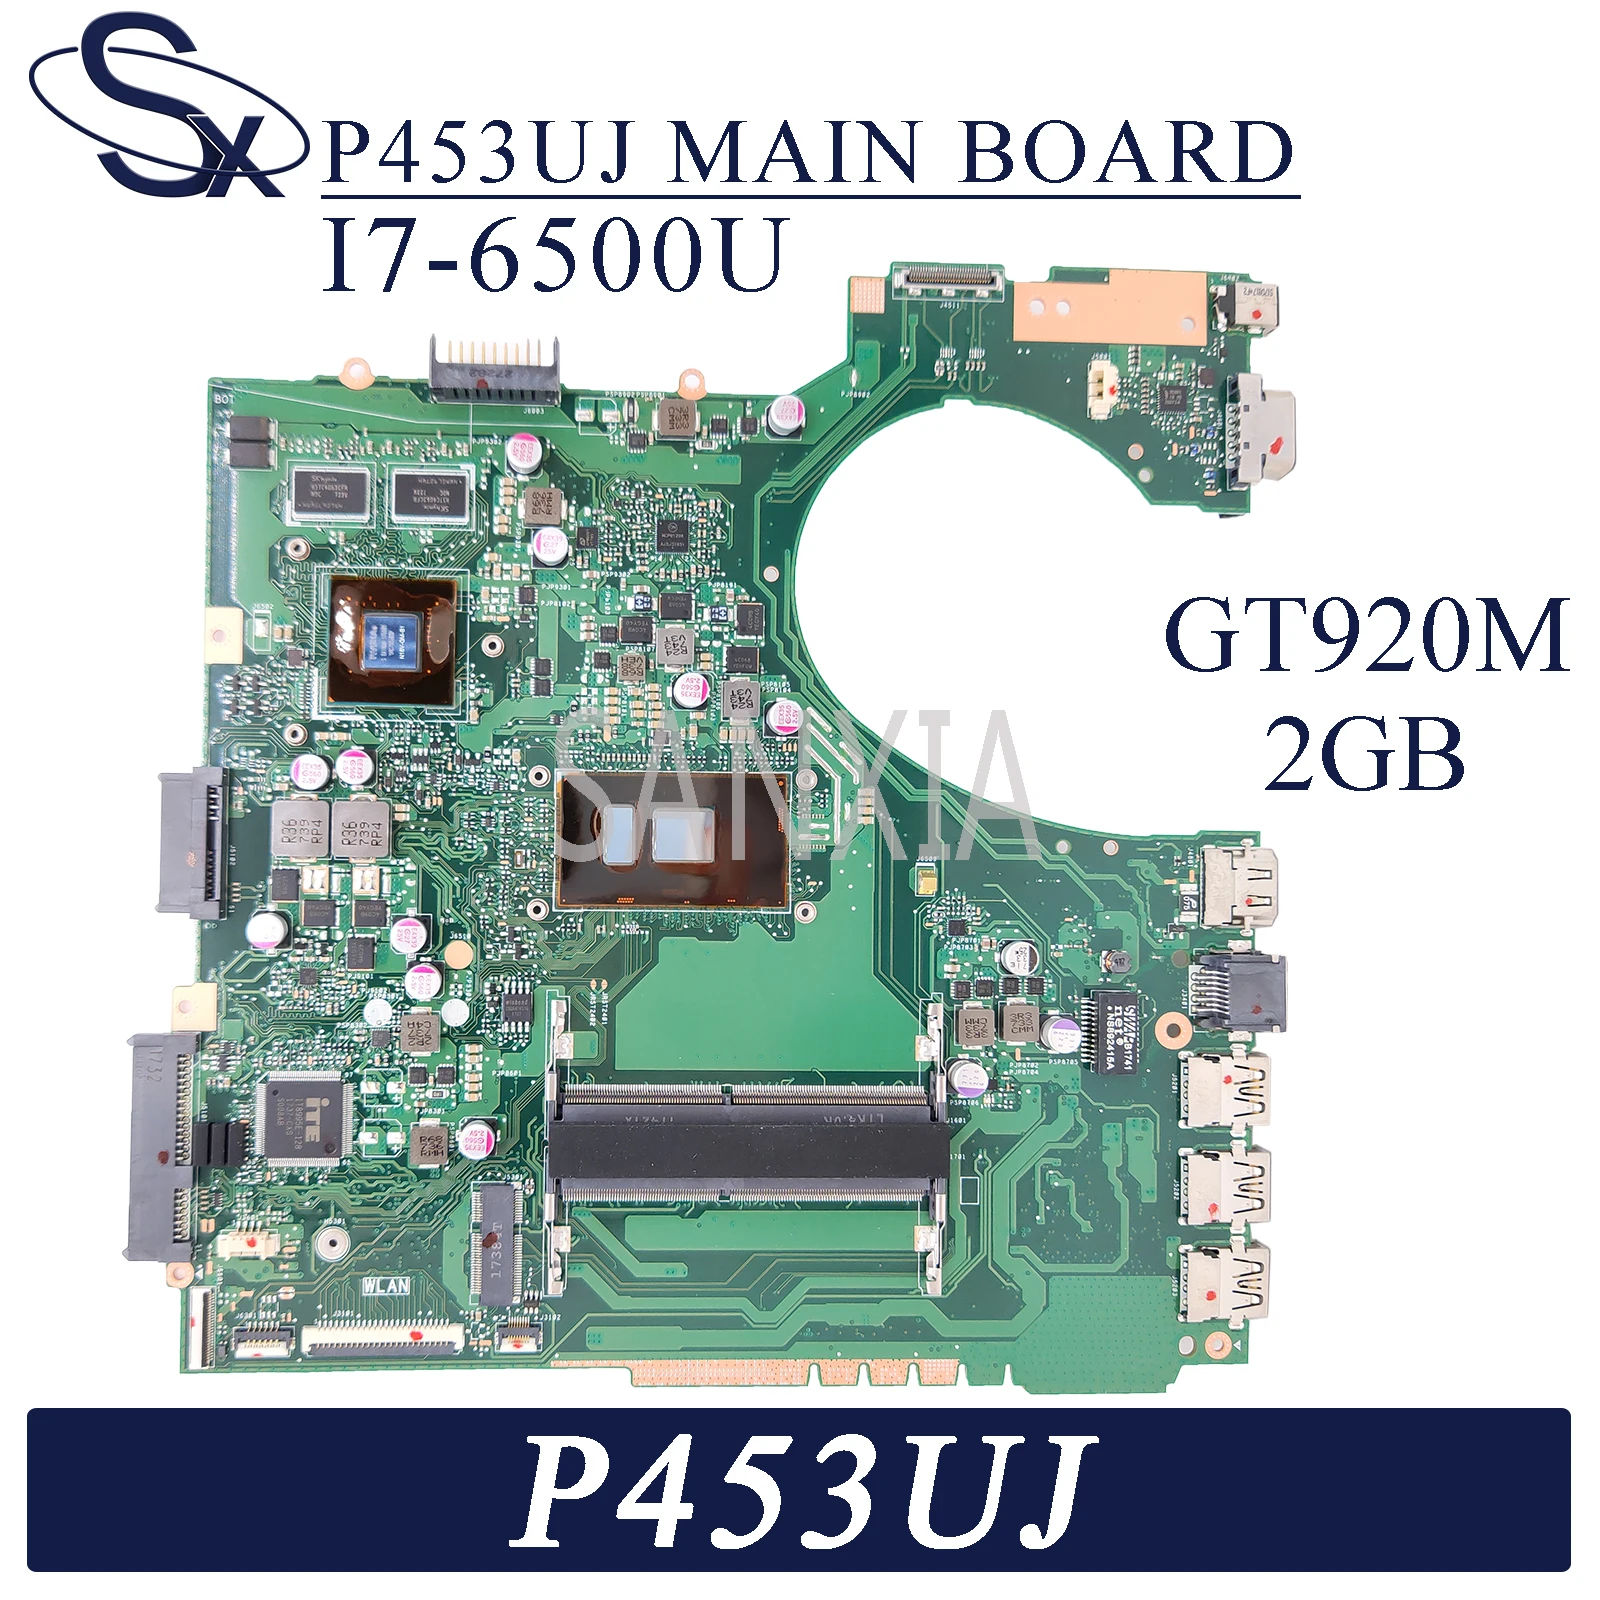 

KEFU P453UJ Laptop motherboard for ASUS P453UJ P453U original mainboard I7-6500U GT920M-2GB